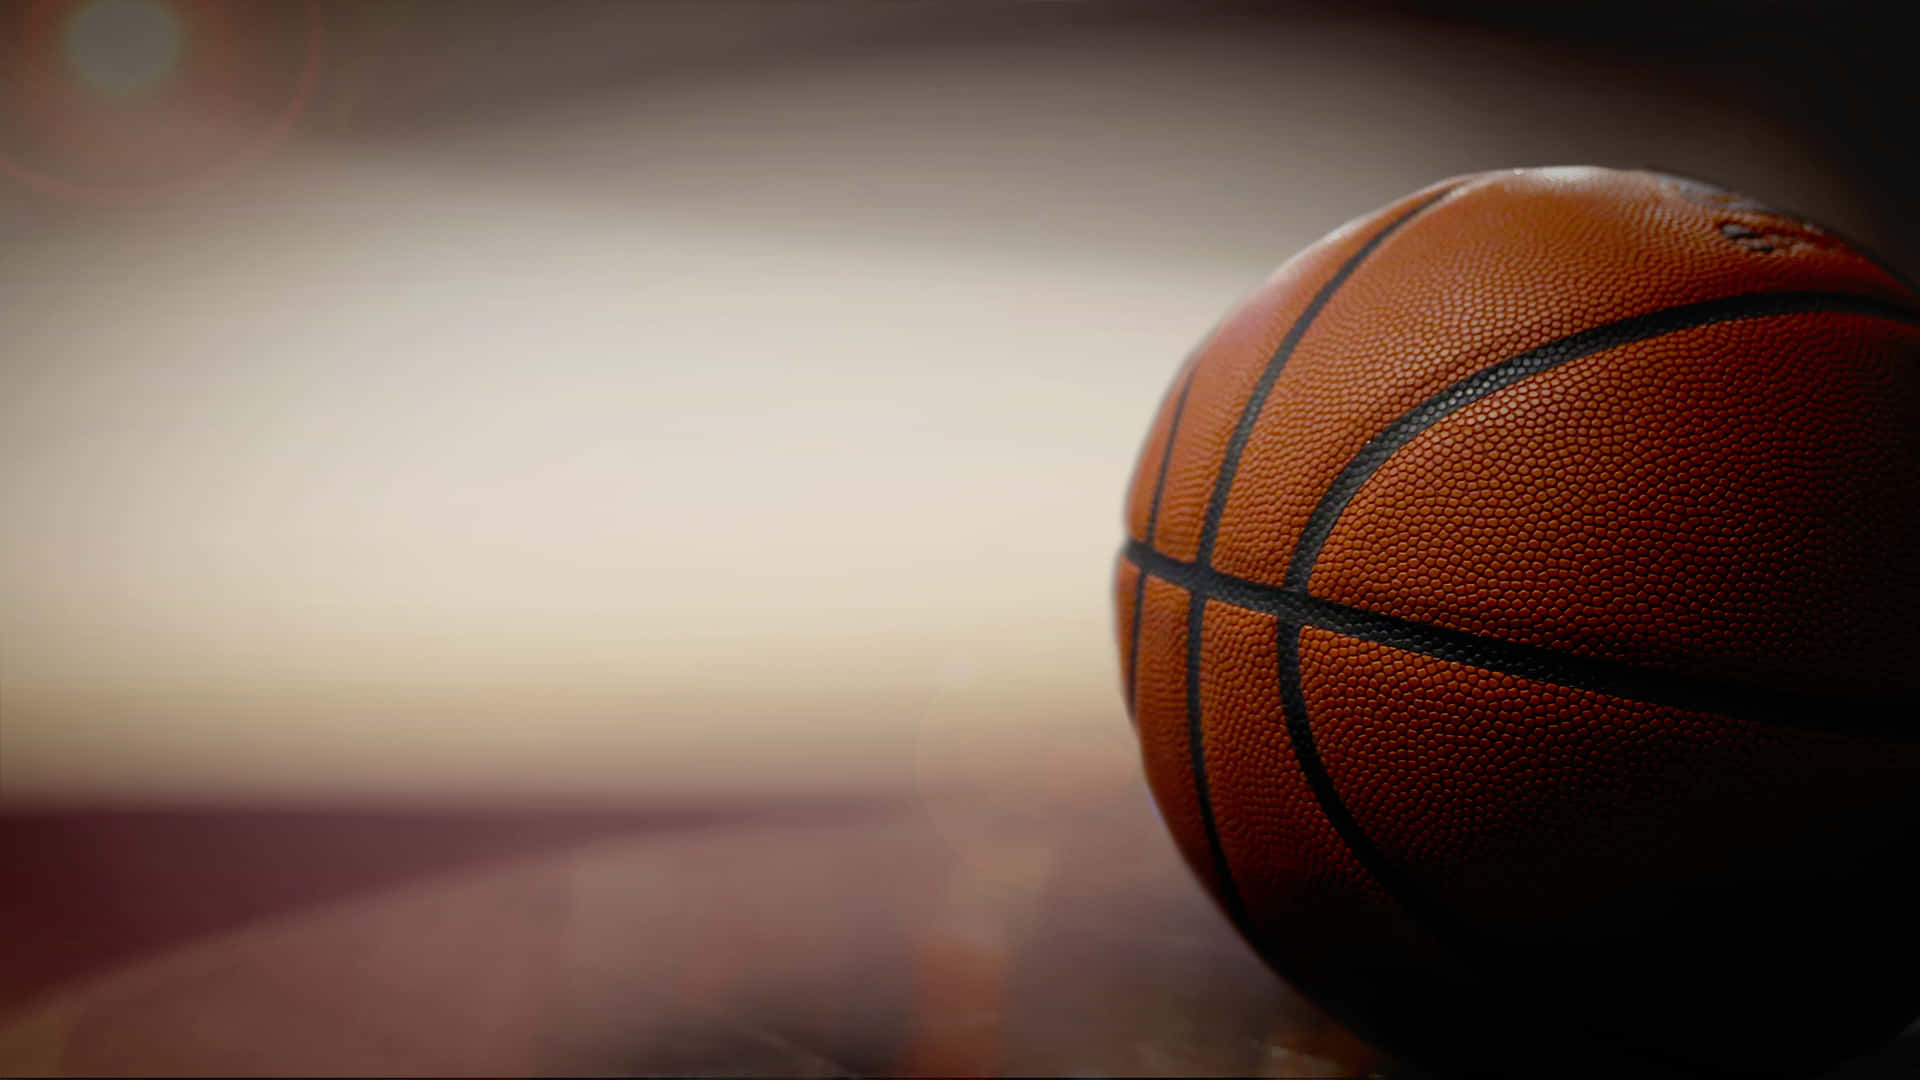 Dribbelnund Dunking: Basketball In Aktion!